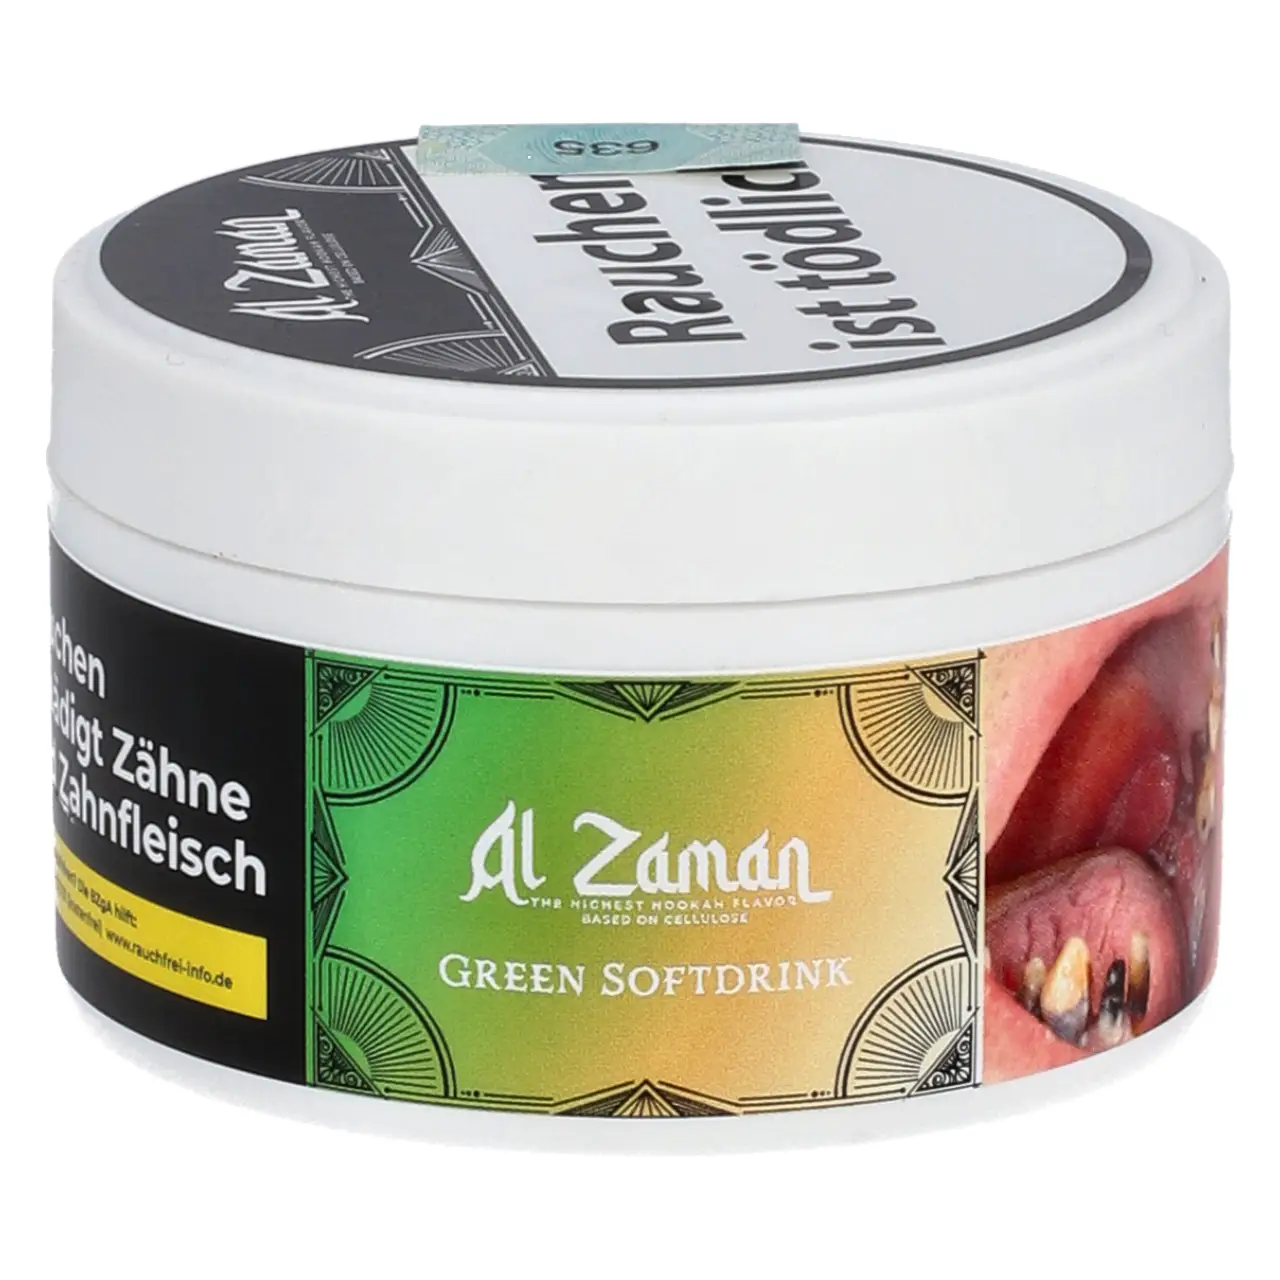 Al Zaman nikotinfreier Shisha Tabak Green Softdrink - Holunderblüte Ingwer Zitrone - 25g